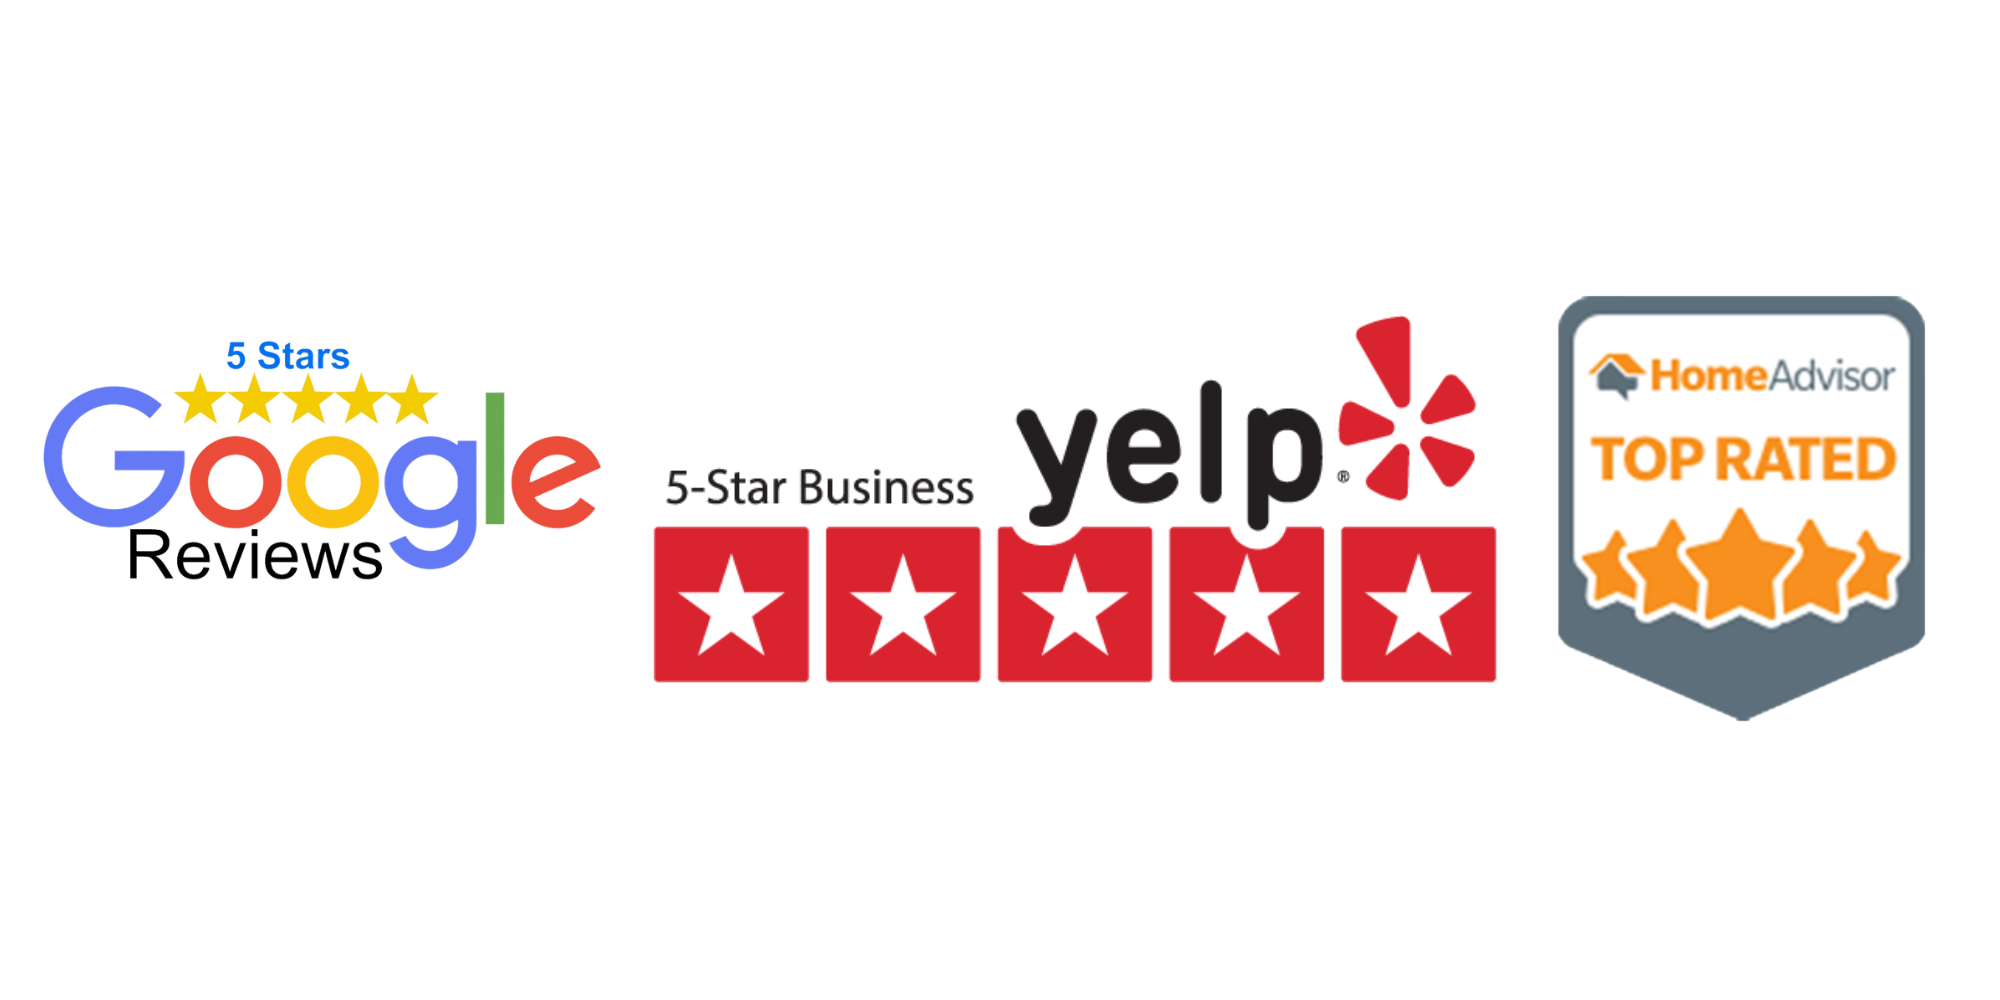 5 stars reviews